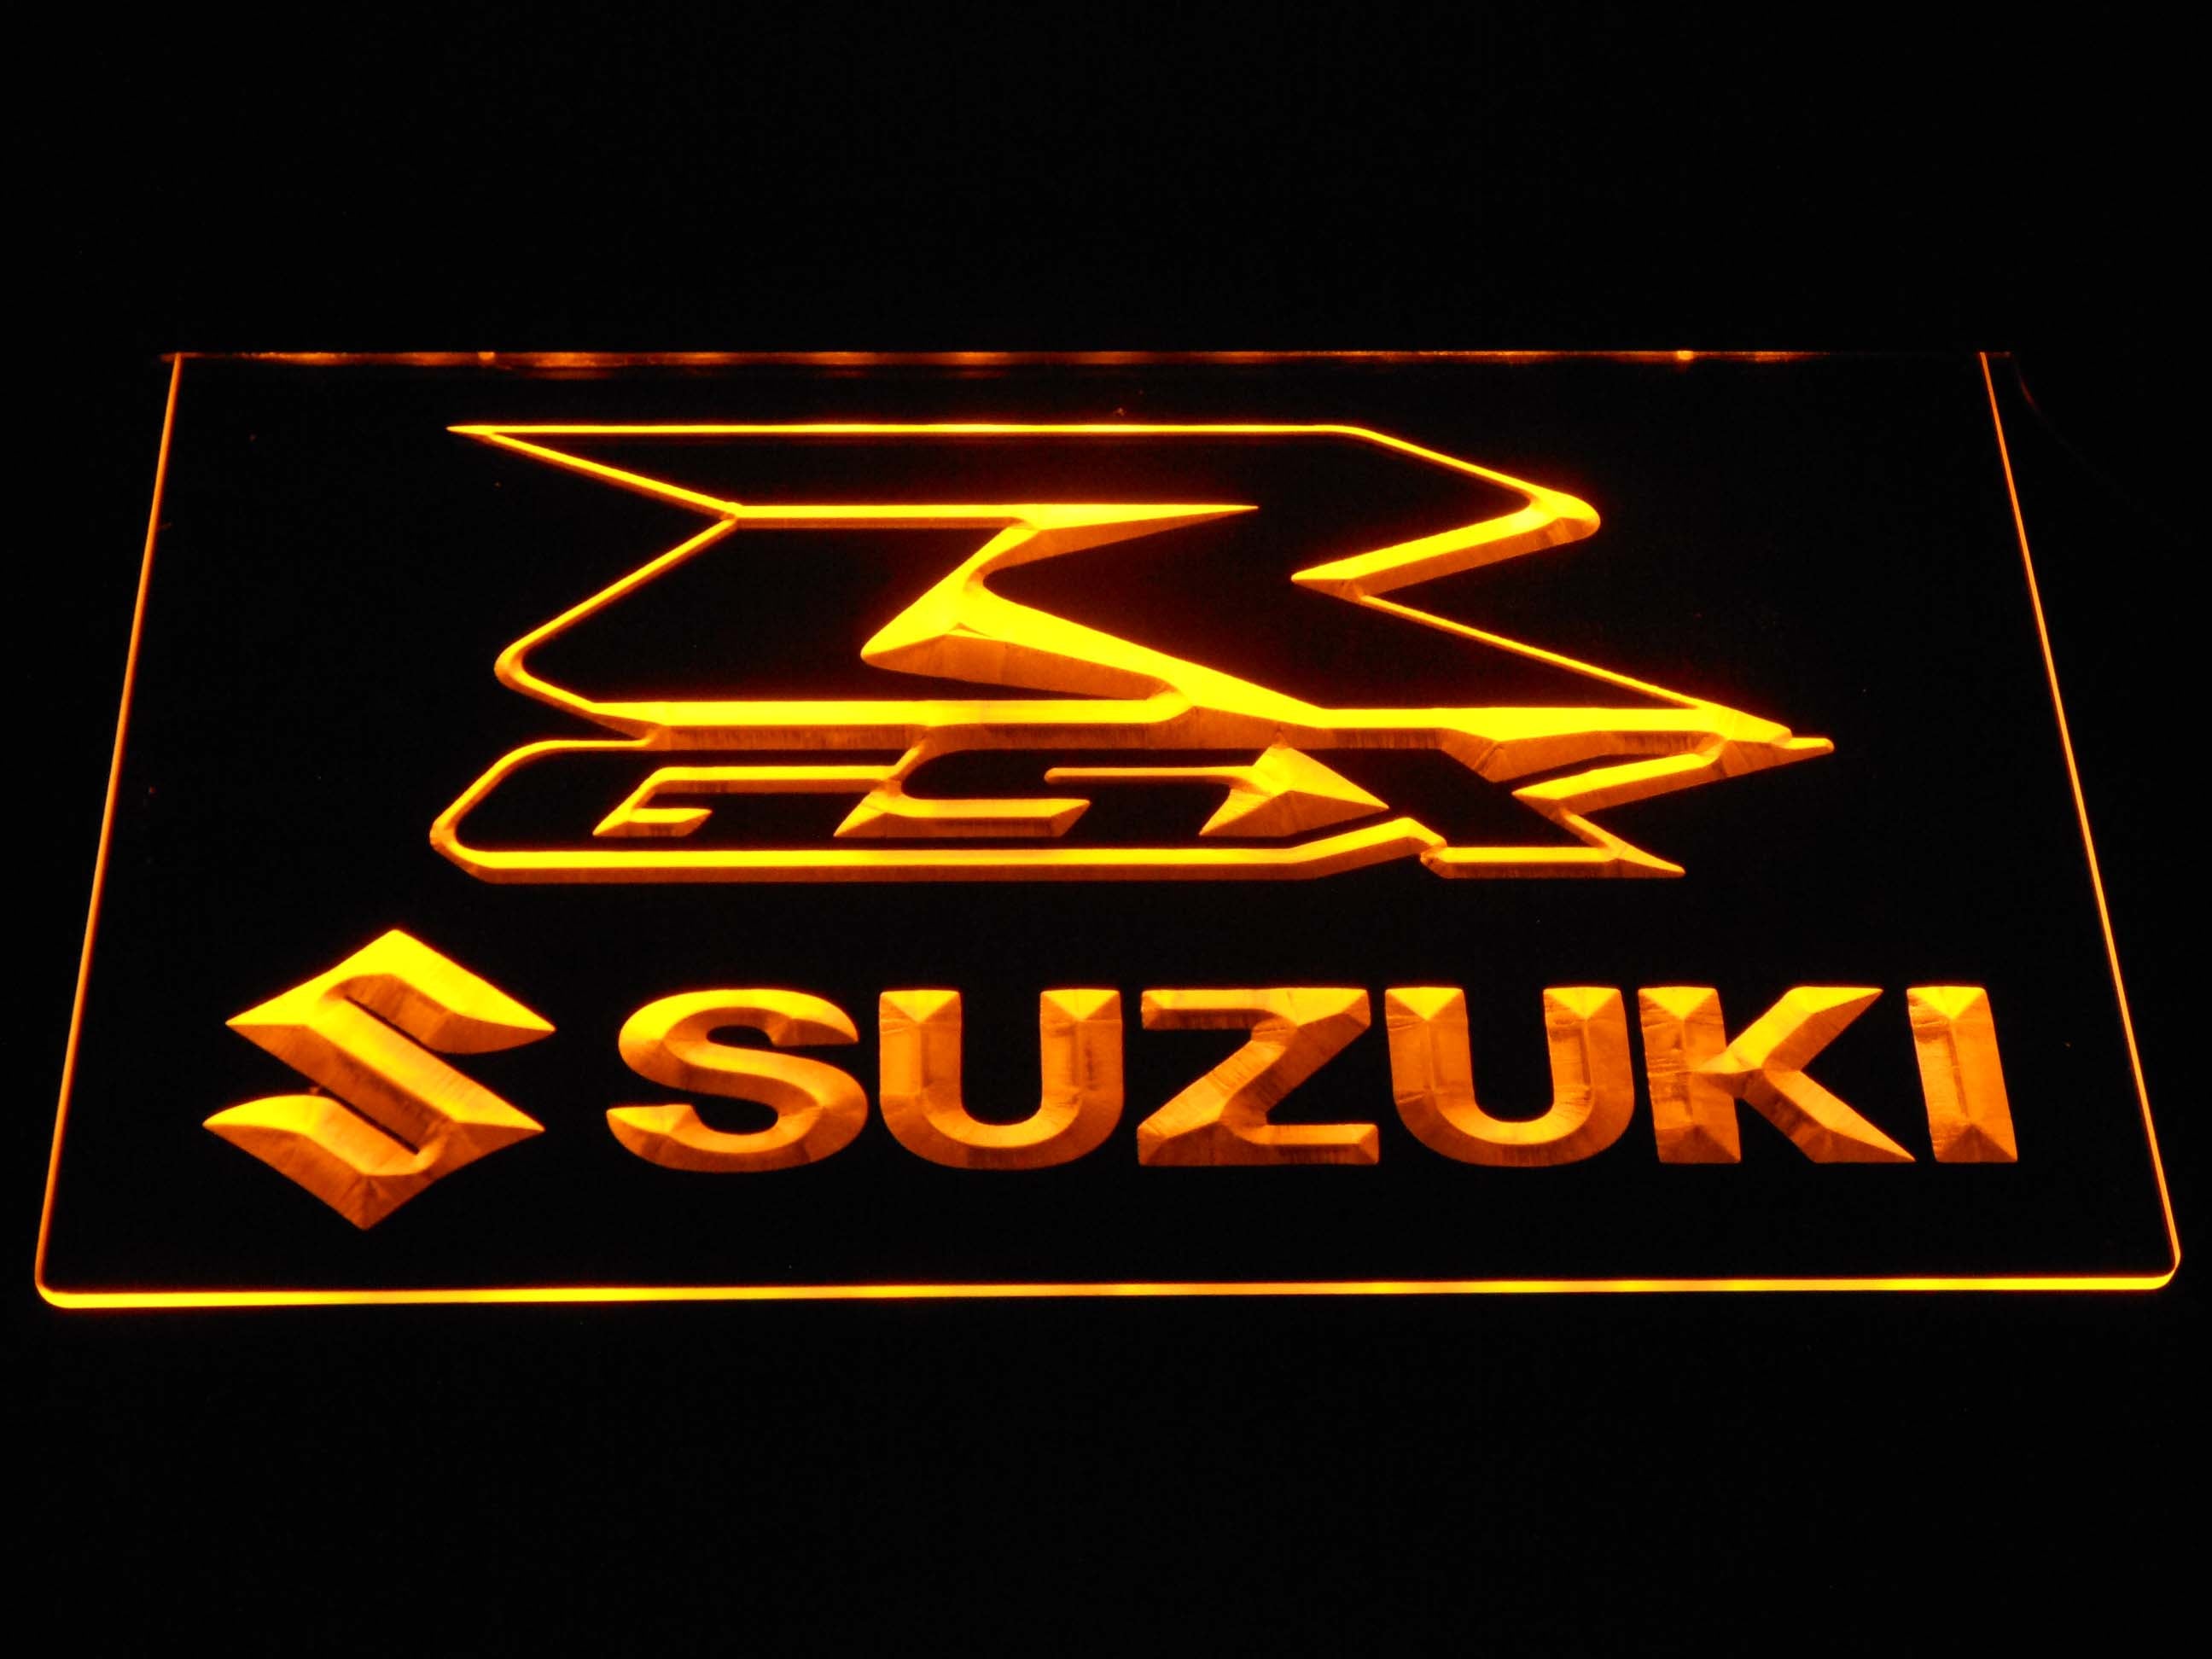 Suzuki Gsx-R Motorcycle Neon LED Light Sign